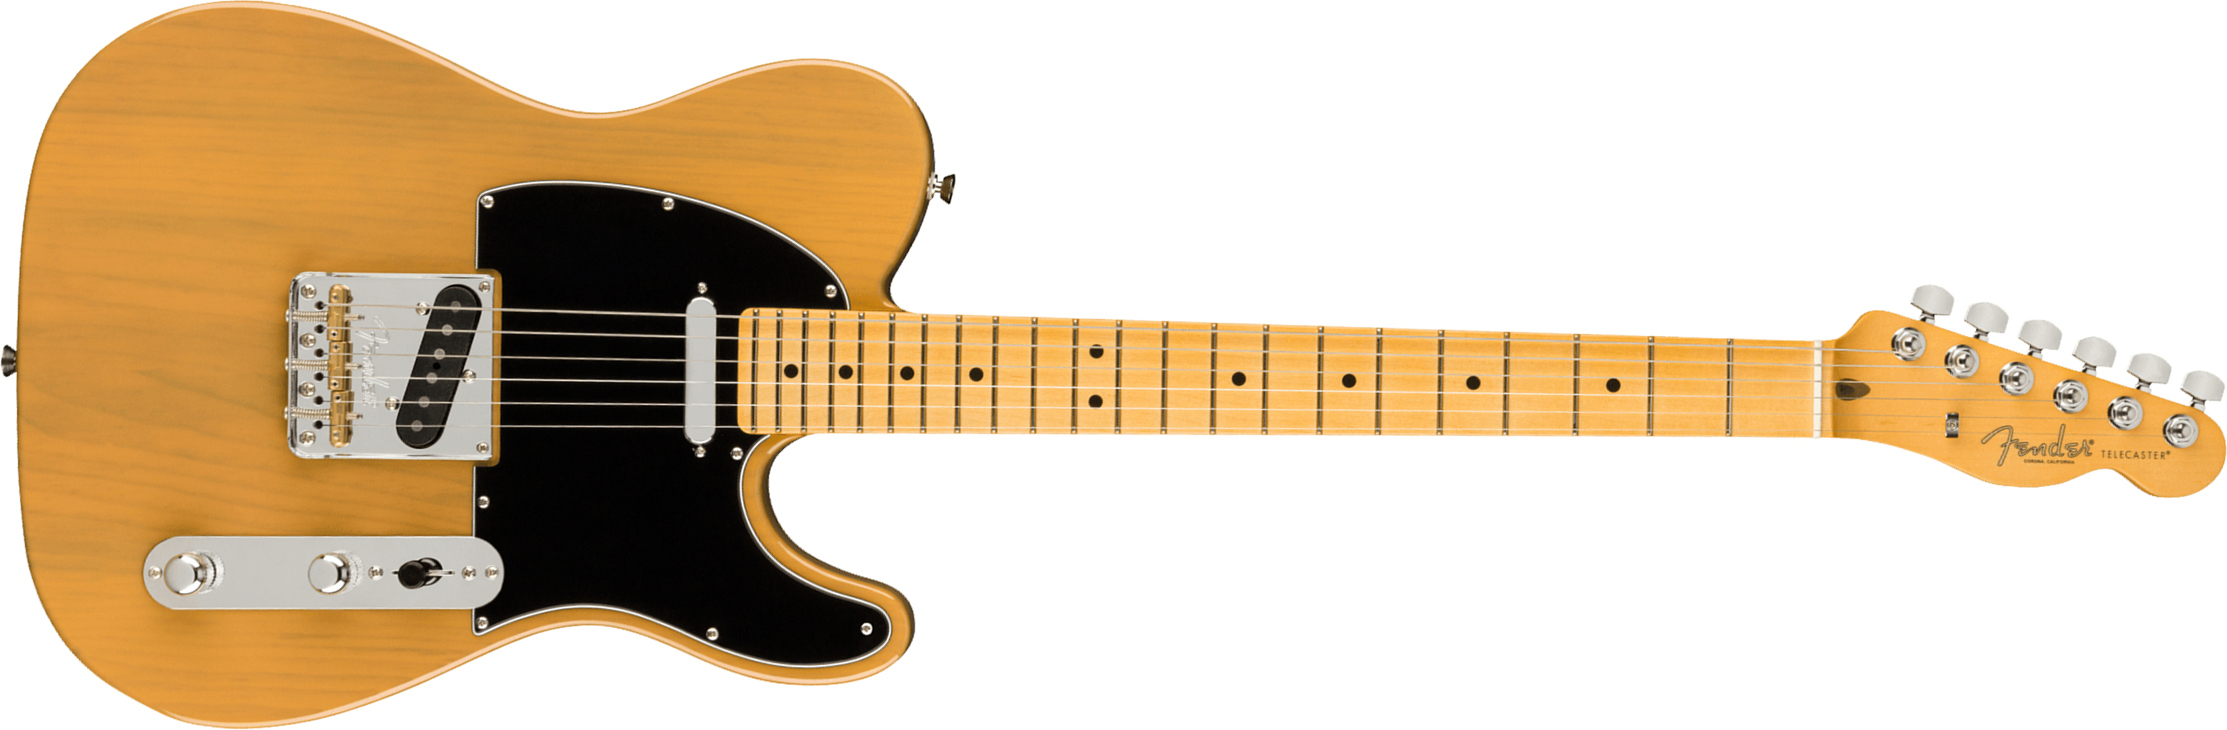 Fender Tele American Professional Ii Usa Mn - Butterscotch Blonde - Tel shape electric guitar - Main picture